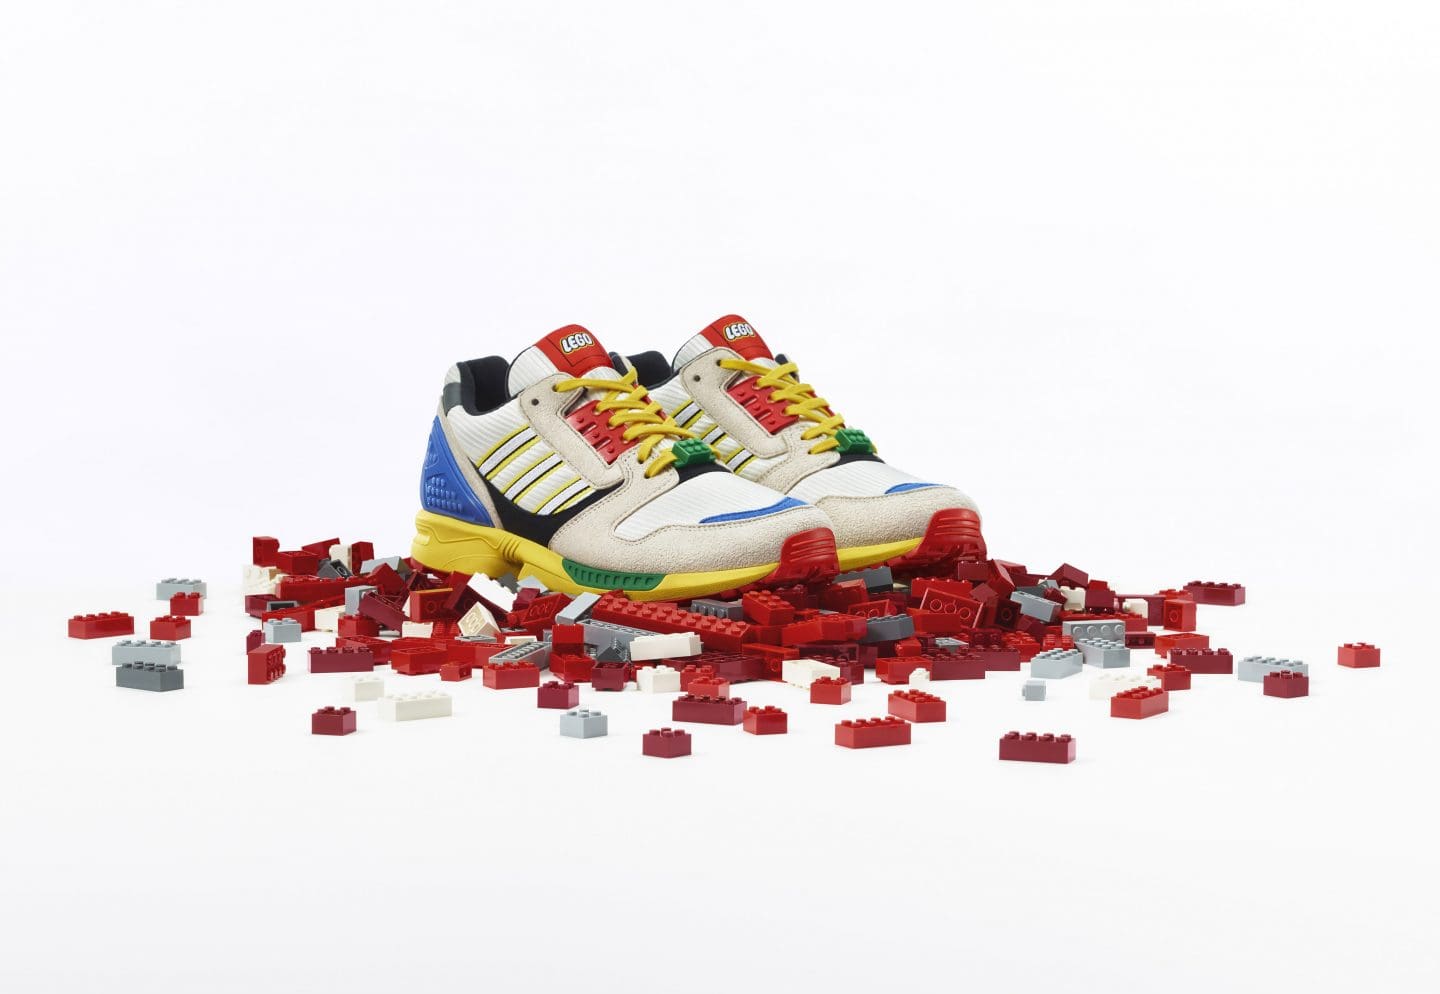 Adidas_partnership_with_Lego_brand